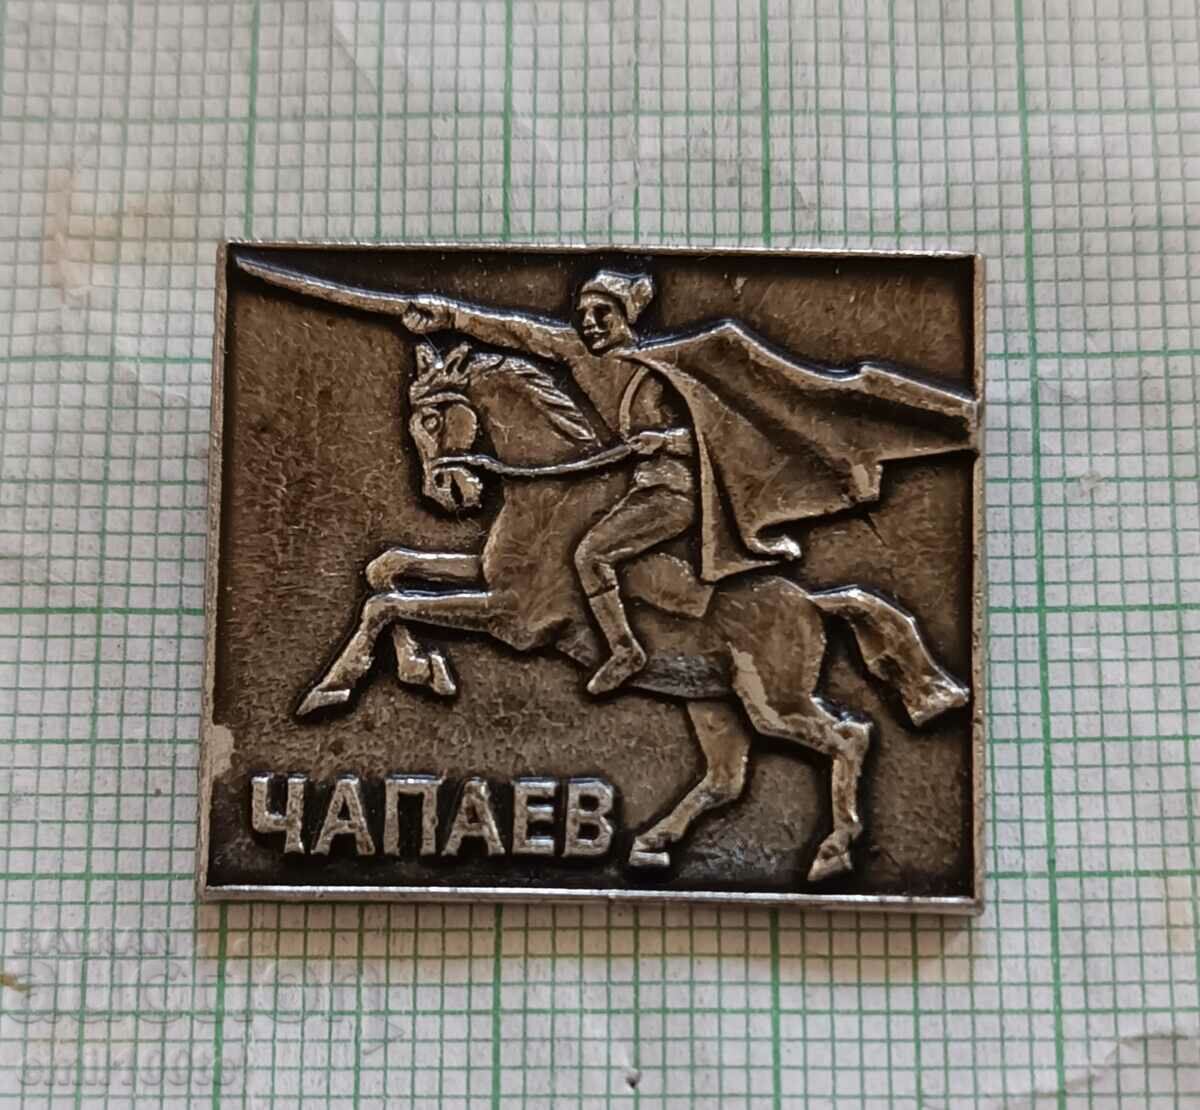 Badge - Chapaev